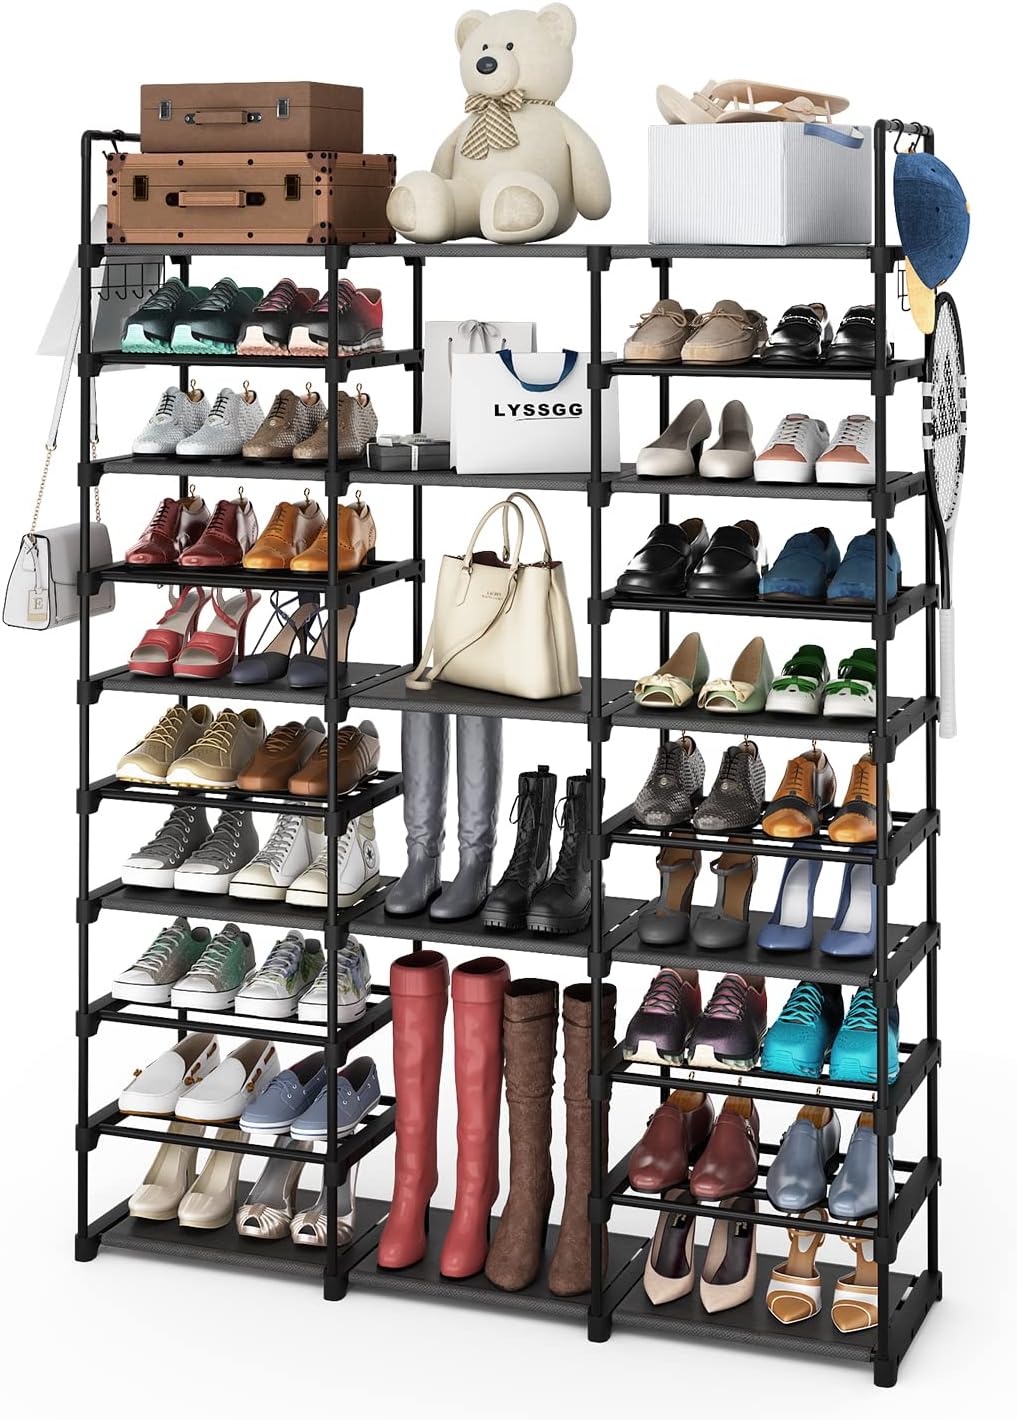 Plzlove 10 Tiers Shoe Rack Organizer for Closet & [...]